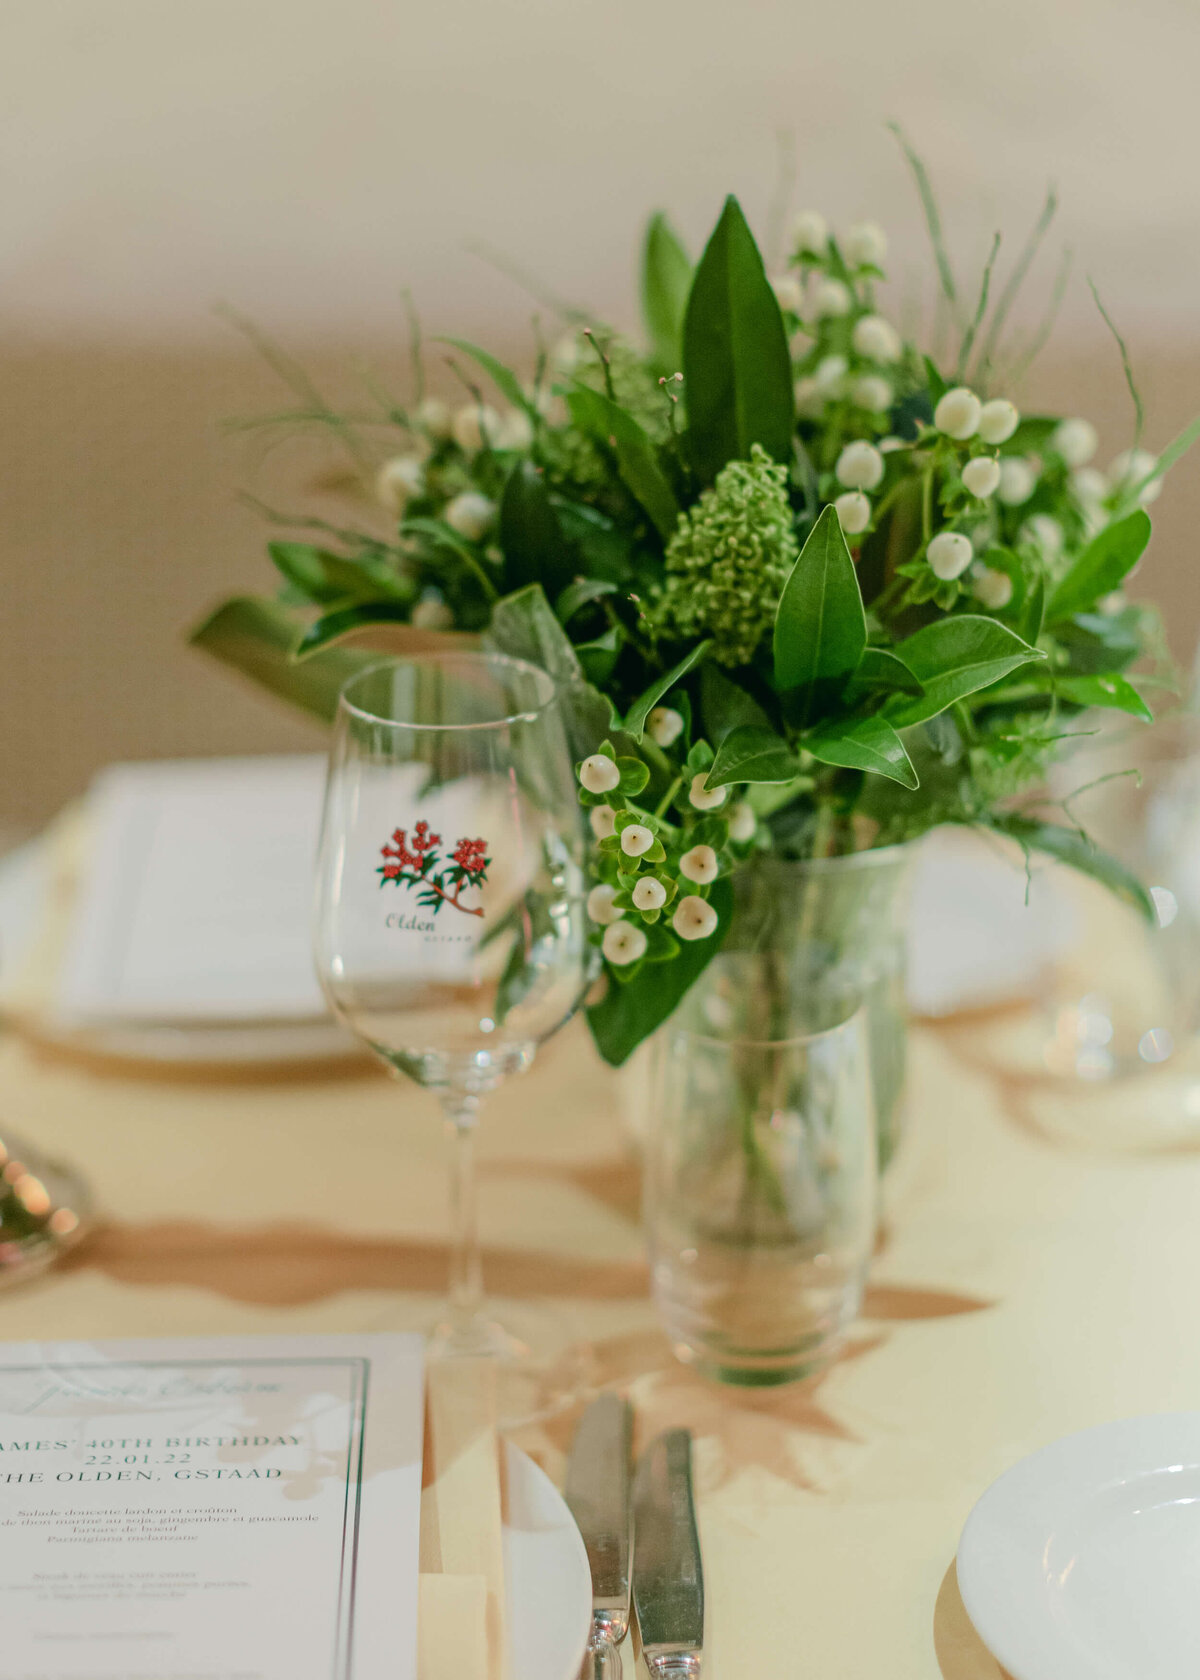 chloe-winstanley-events-gstaad-hotel-olden-table-flowers